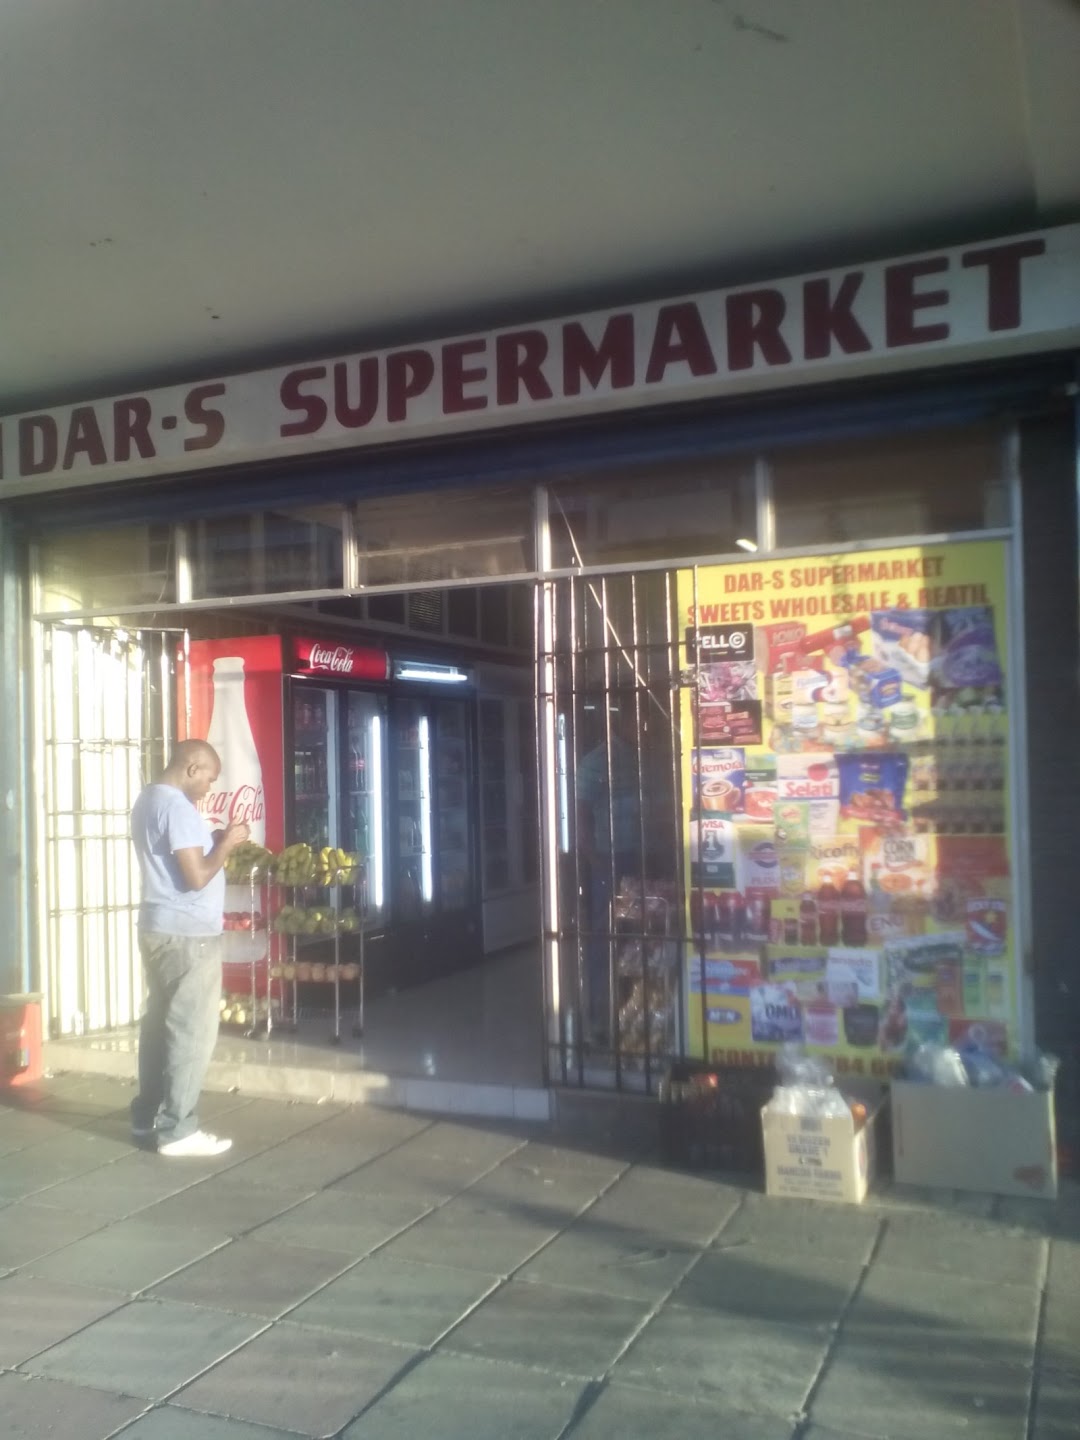 Dar-S Supermarket